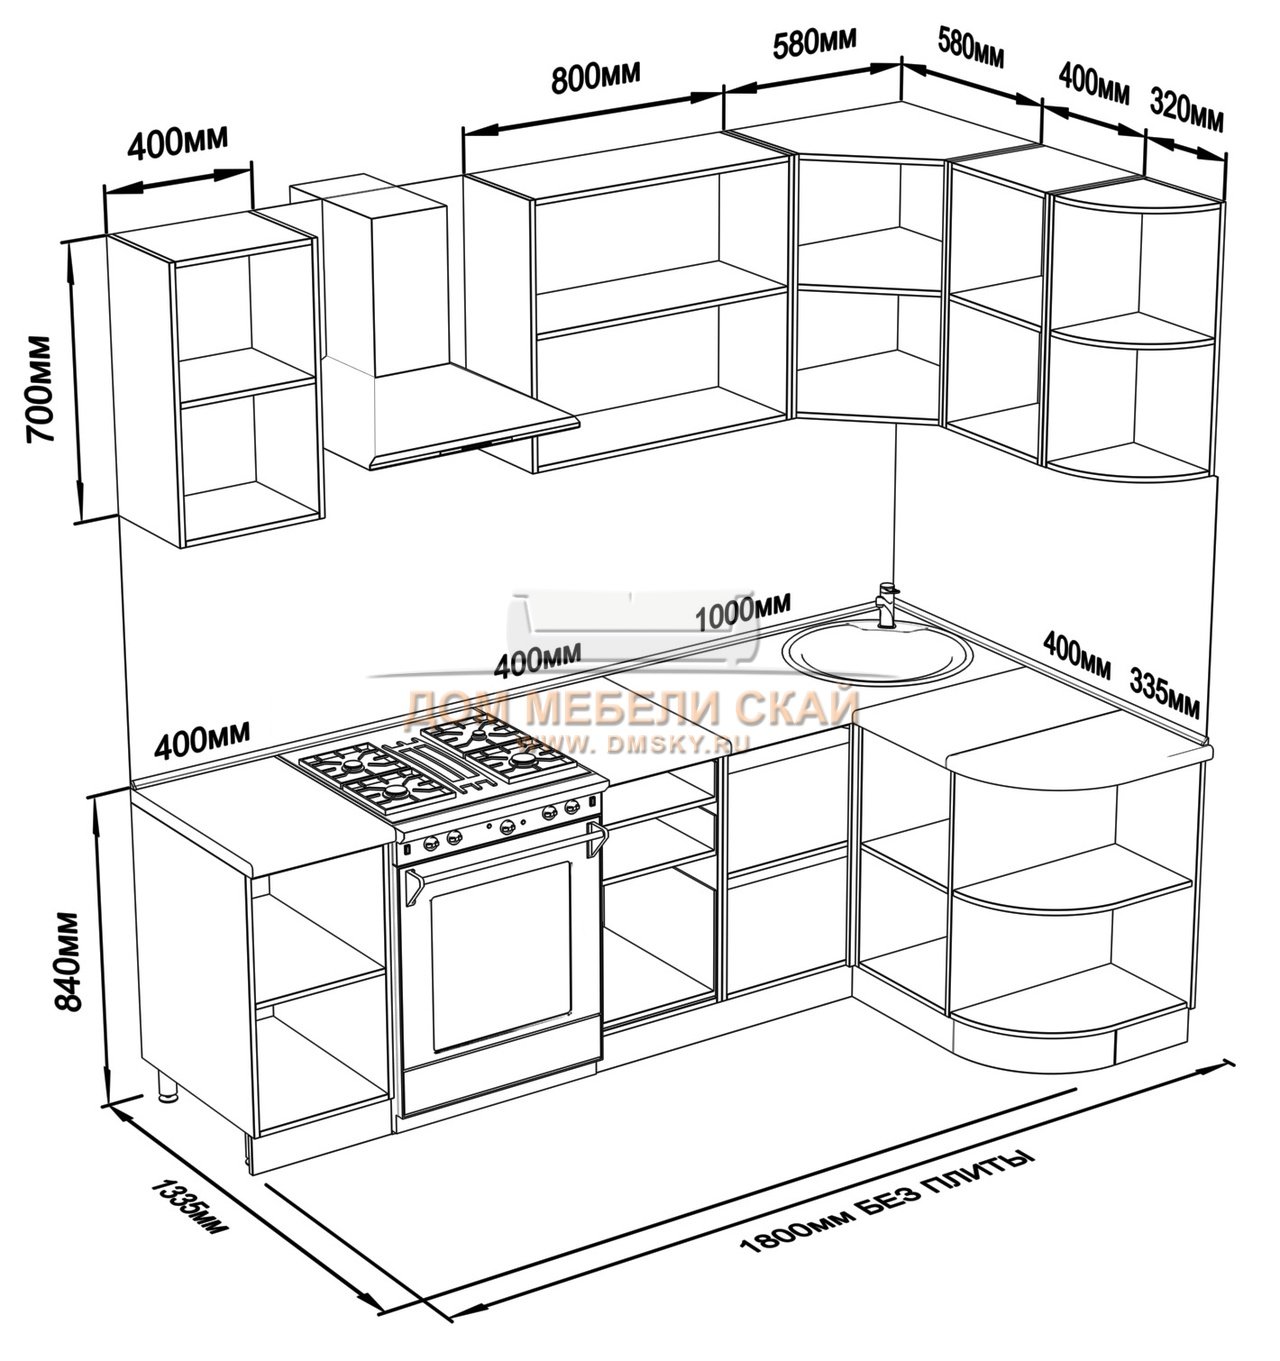 стандартные размеры навесных кухонных шкафов